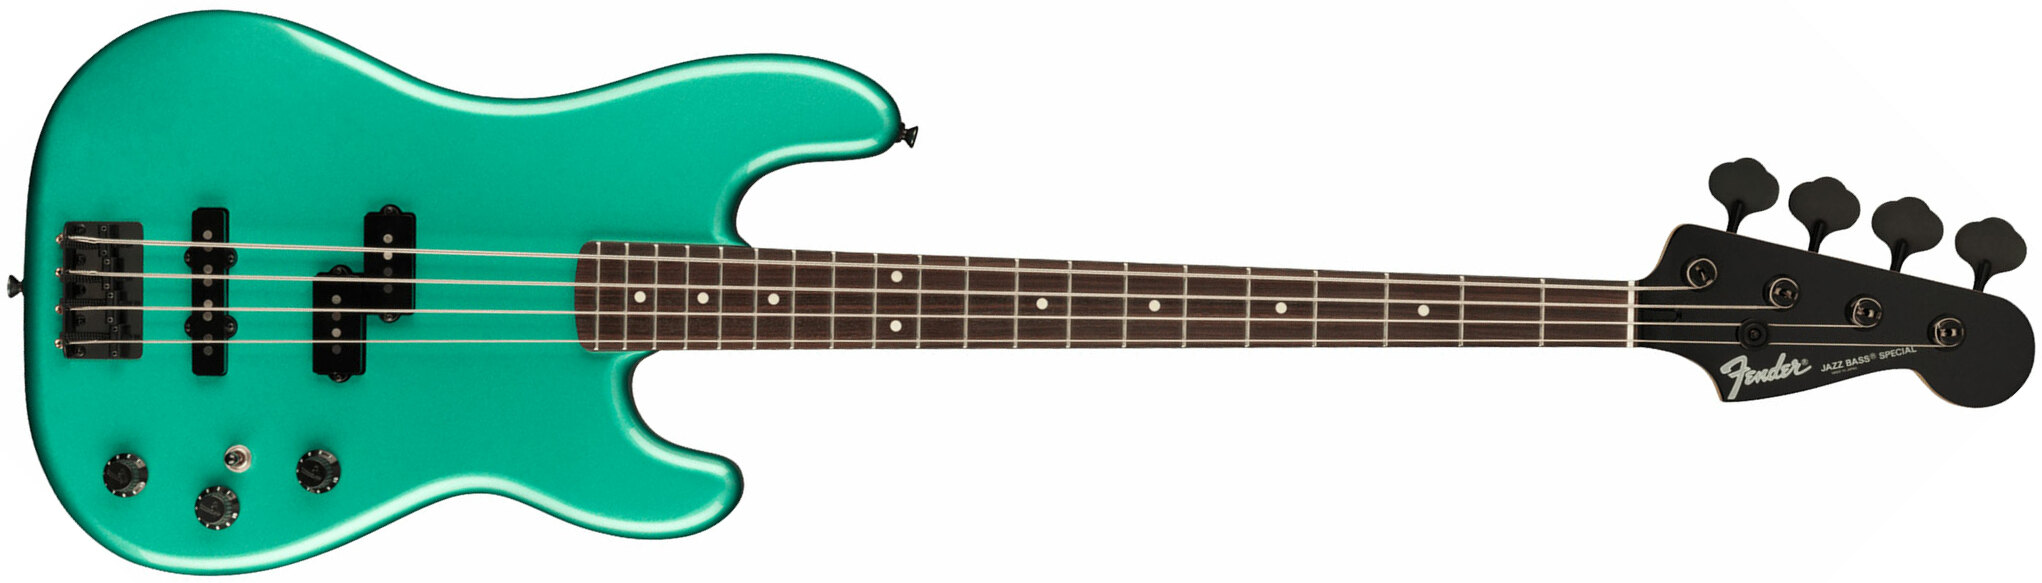 Fender Precision Bass Pj Boxer Jap Rw - Sherwood Green Metallic - Solid body elektrische bas - Main picture